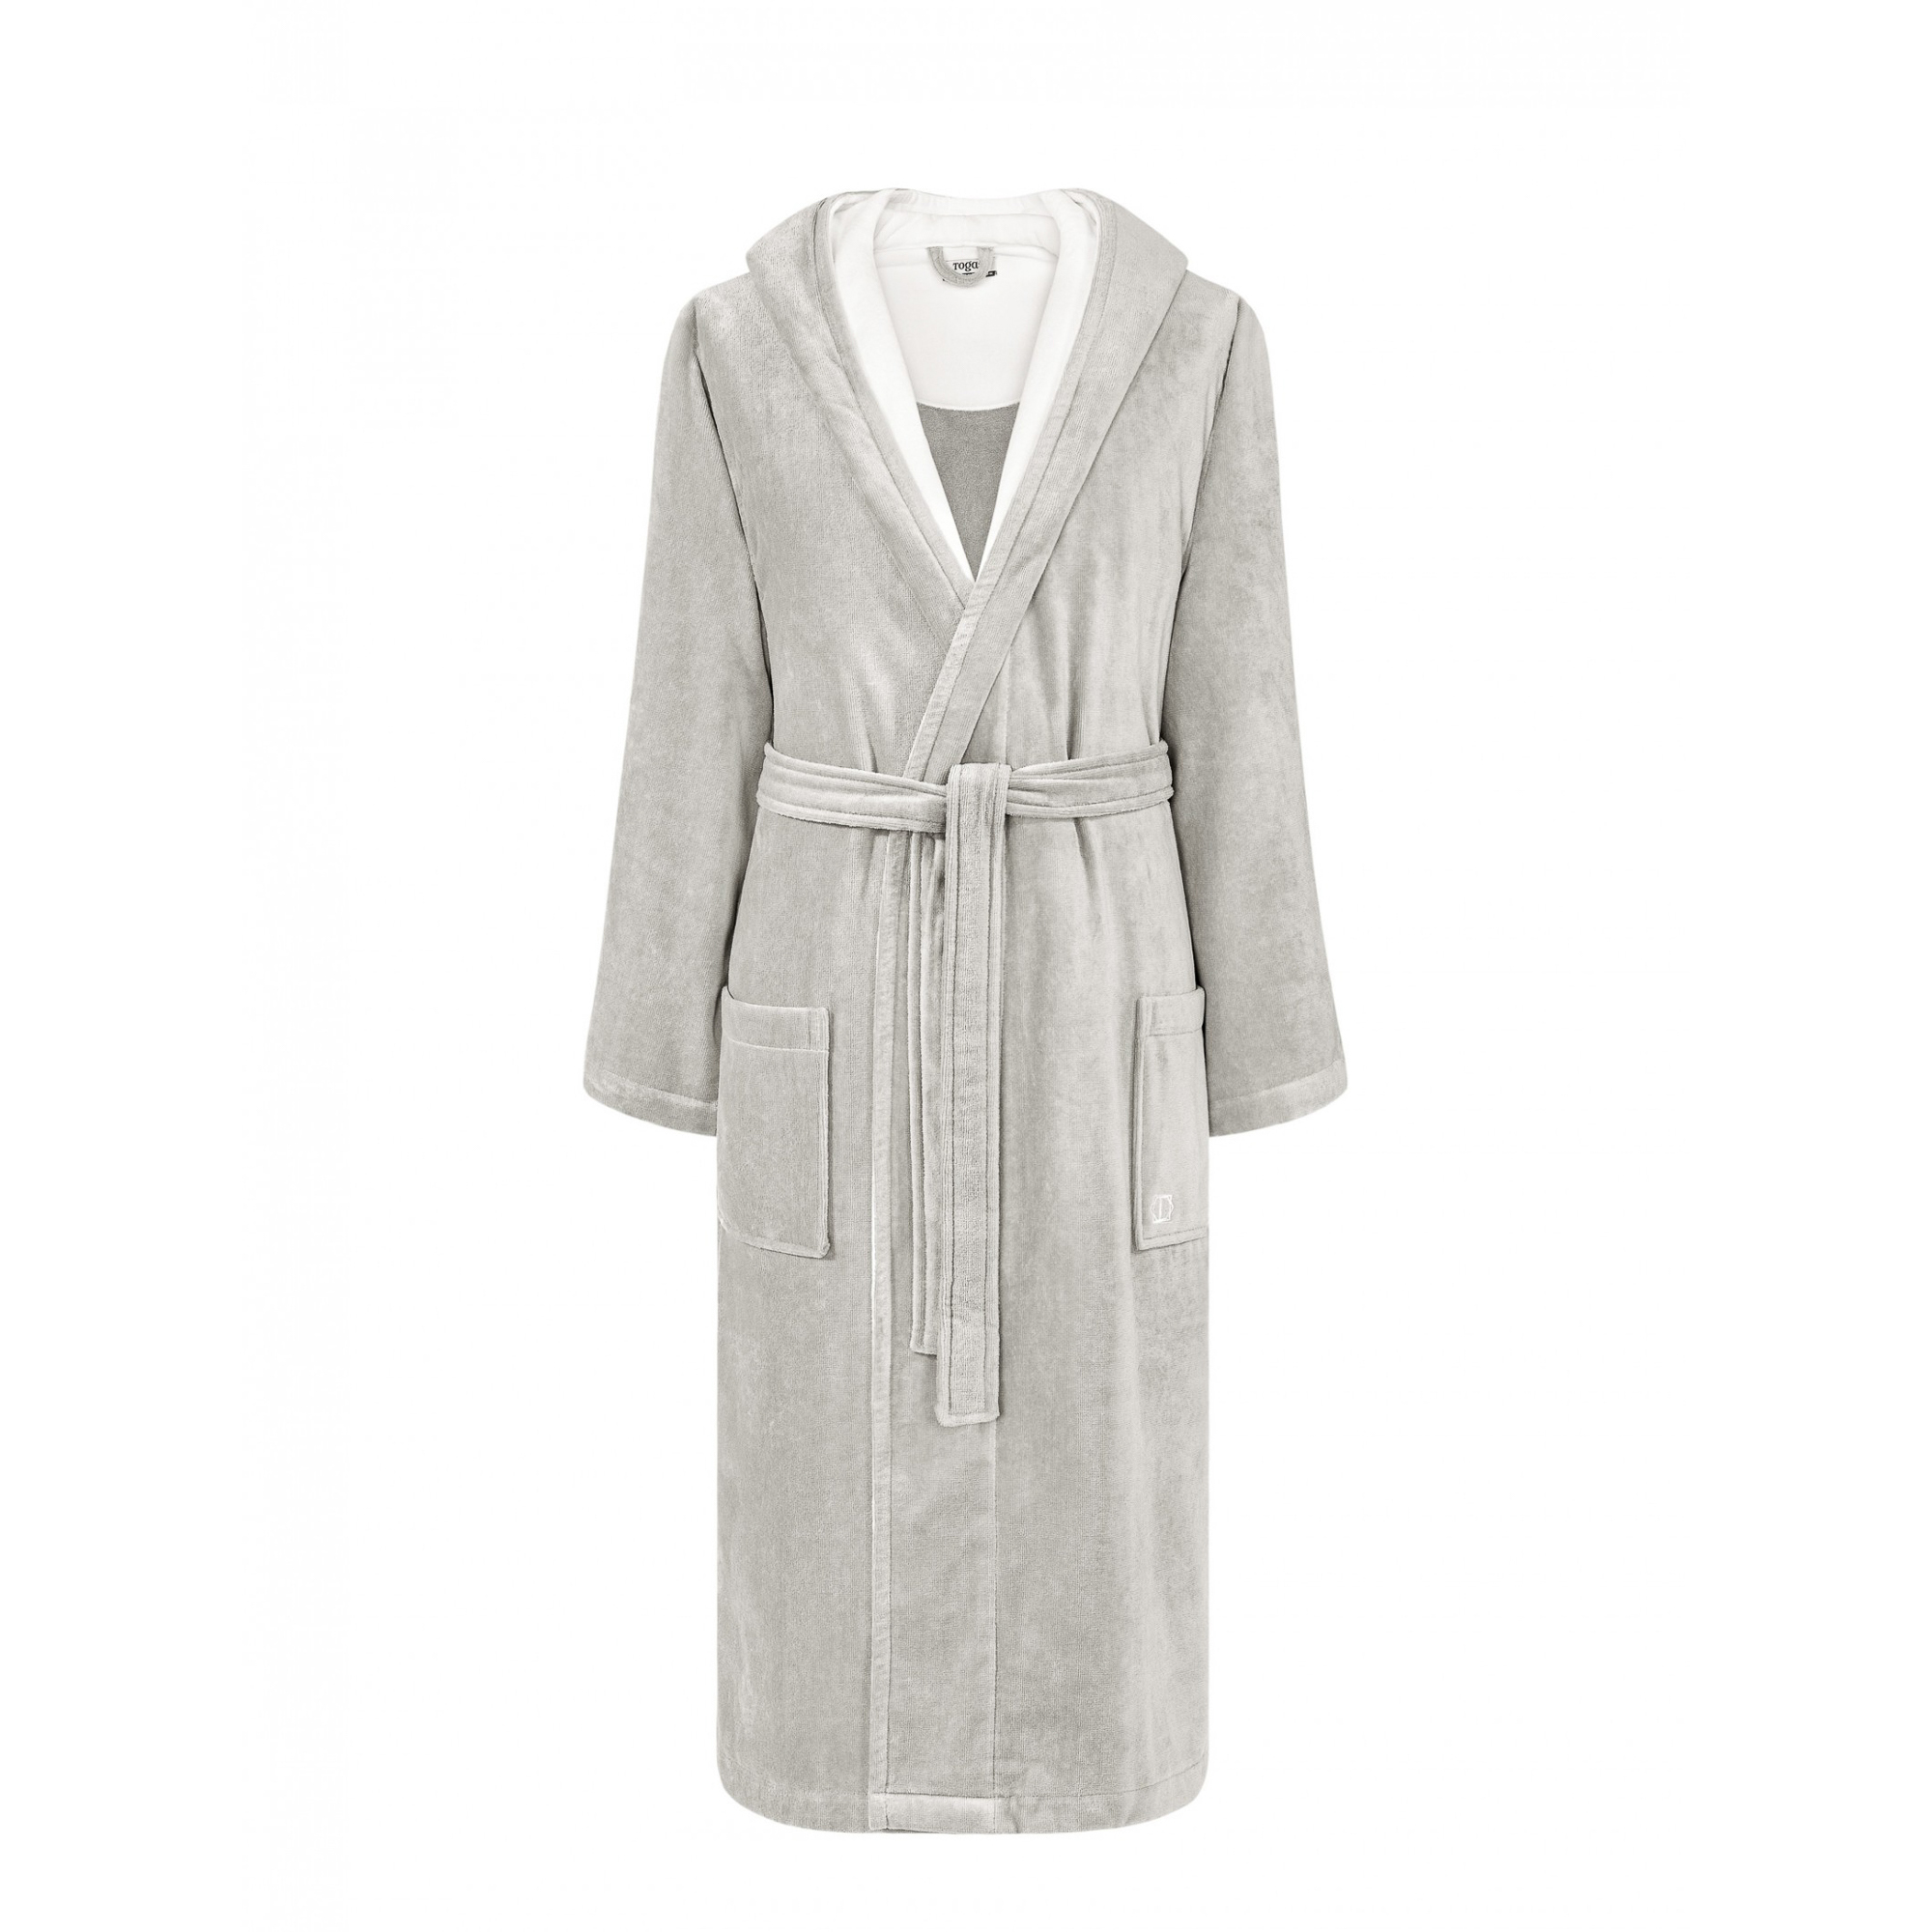 Халат Togas Арт Лайн серый с белым XXXL(56) халат кимоно короткое togas наоми чёрное l 48